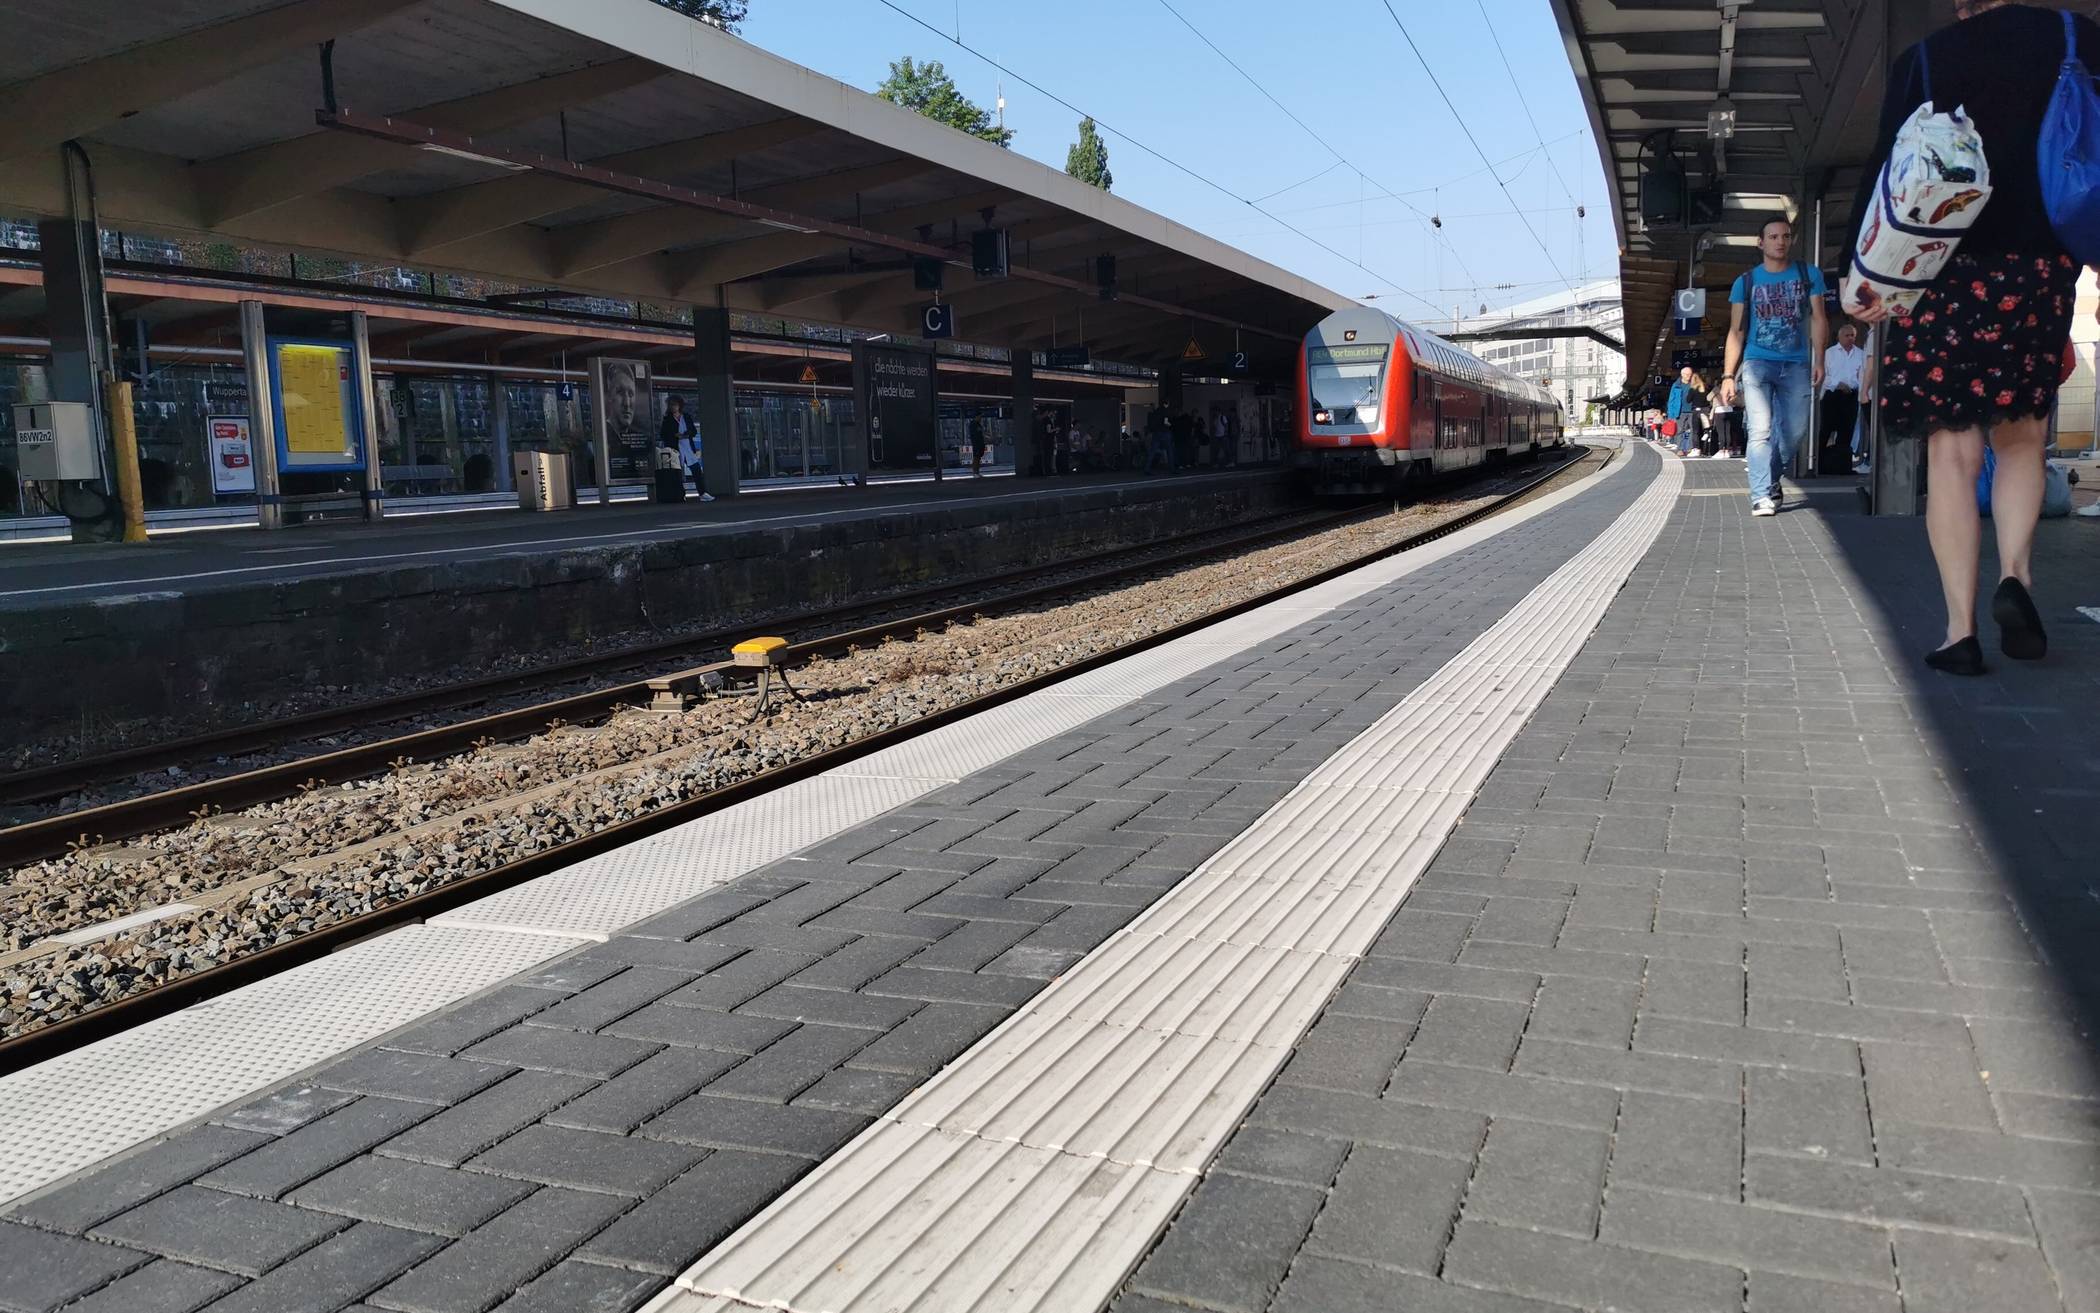  RE 13 sorgt bei Wuppertaler Fahrgästen immer wieder für Ärger. 